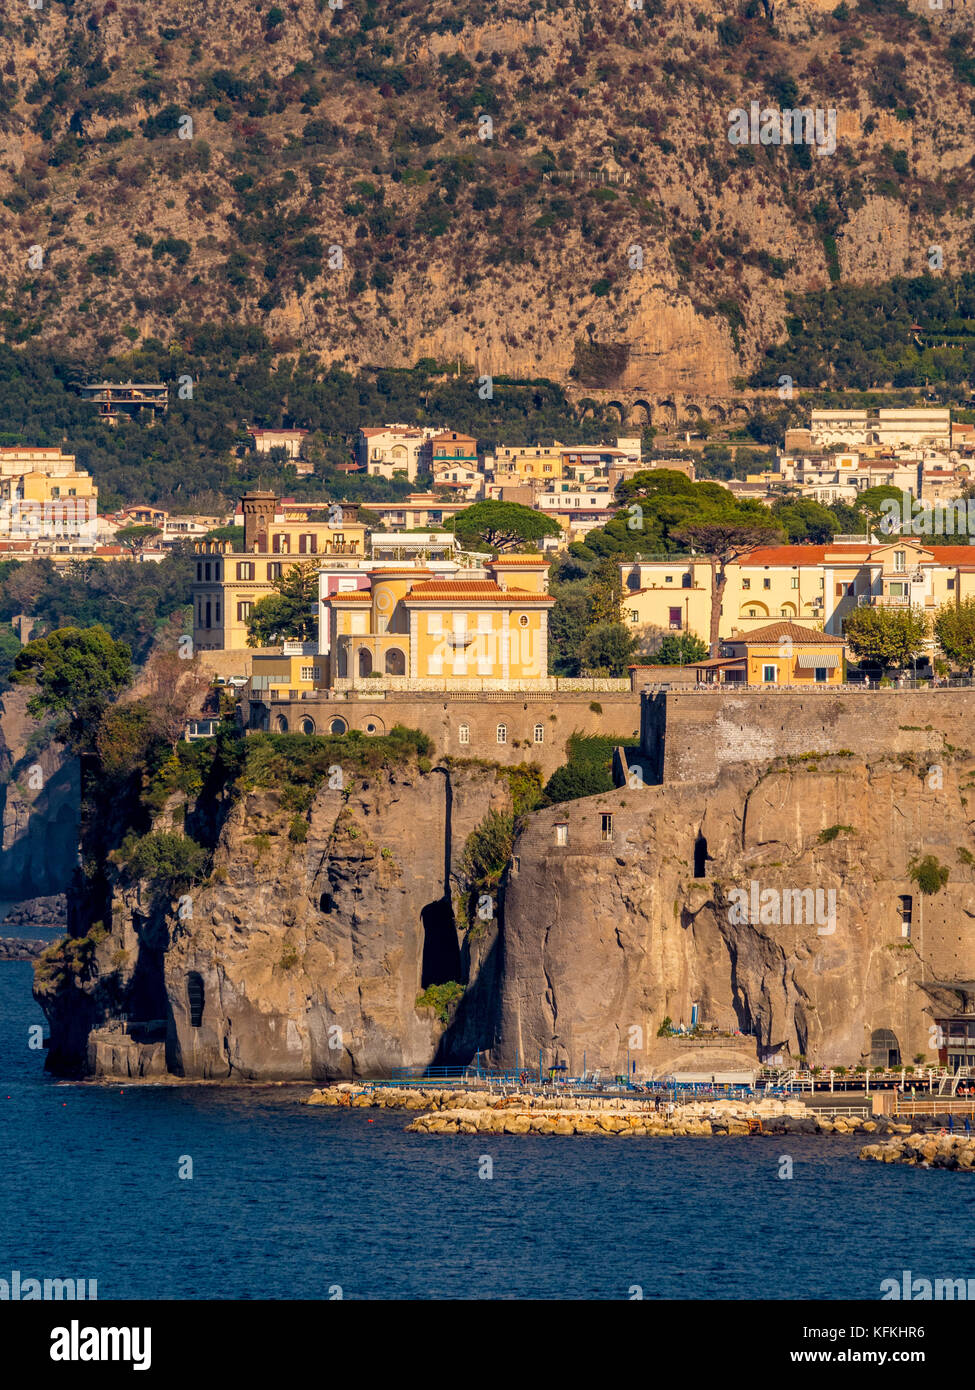 Blick auf Sorrent Cliff Tops Hotels mit eigenem Strand im Vordergrund. Sorrento, Italien. Stockfoto